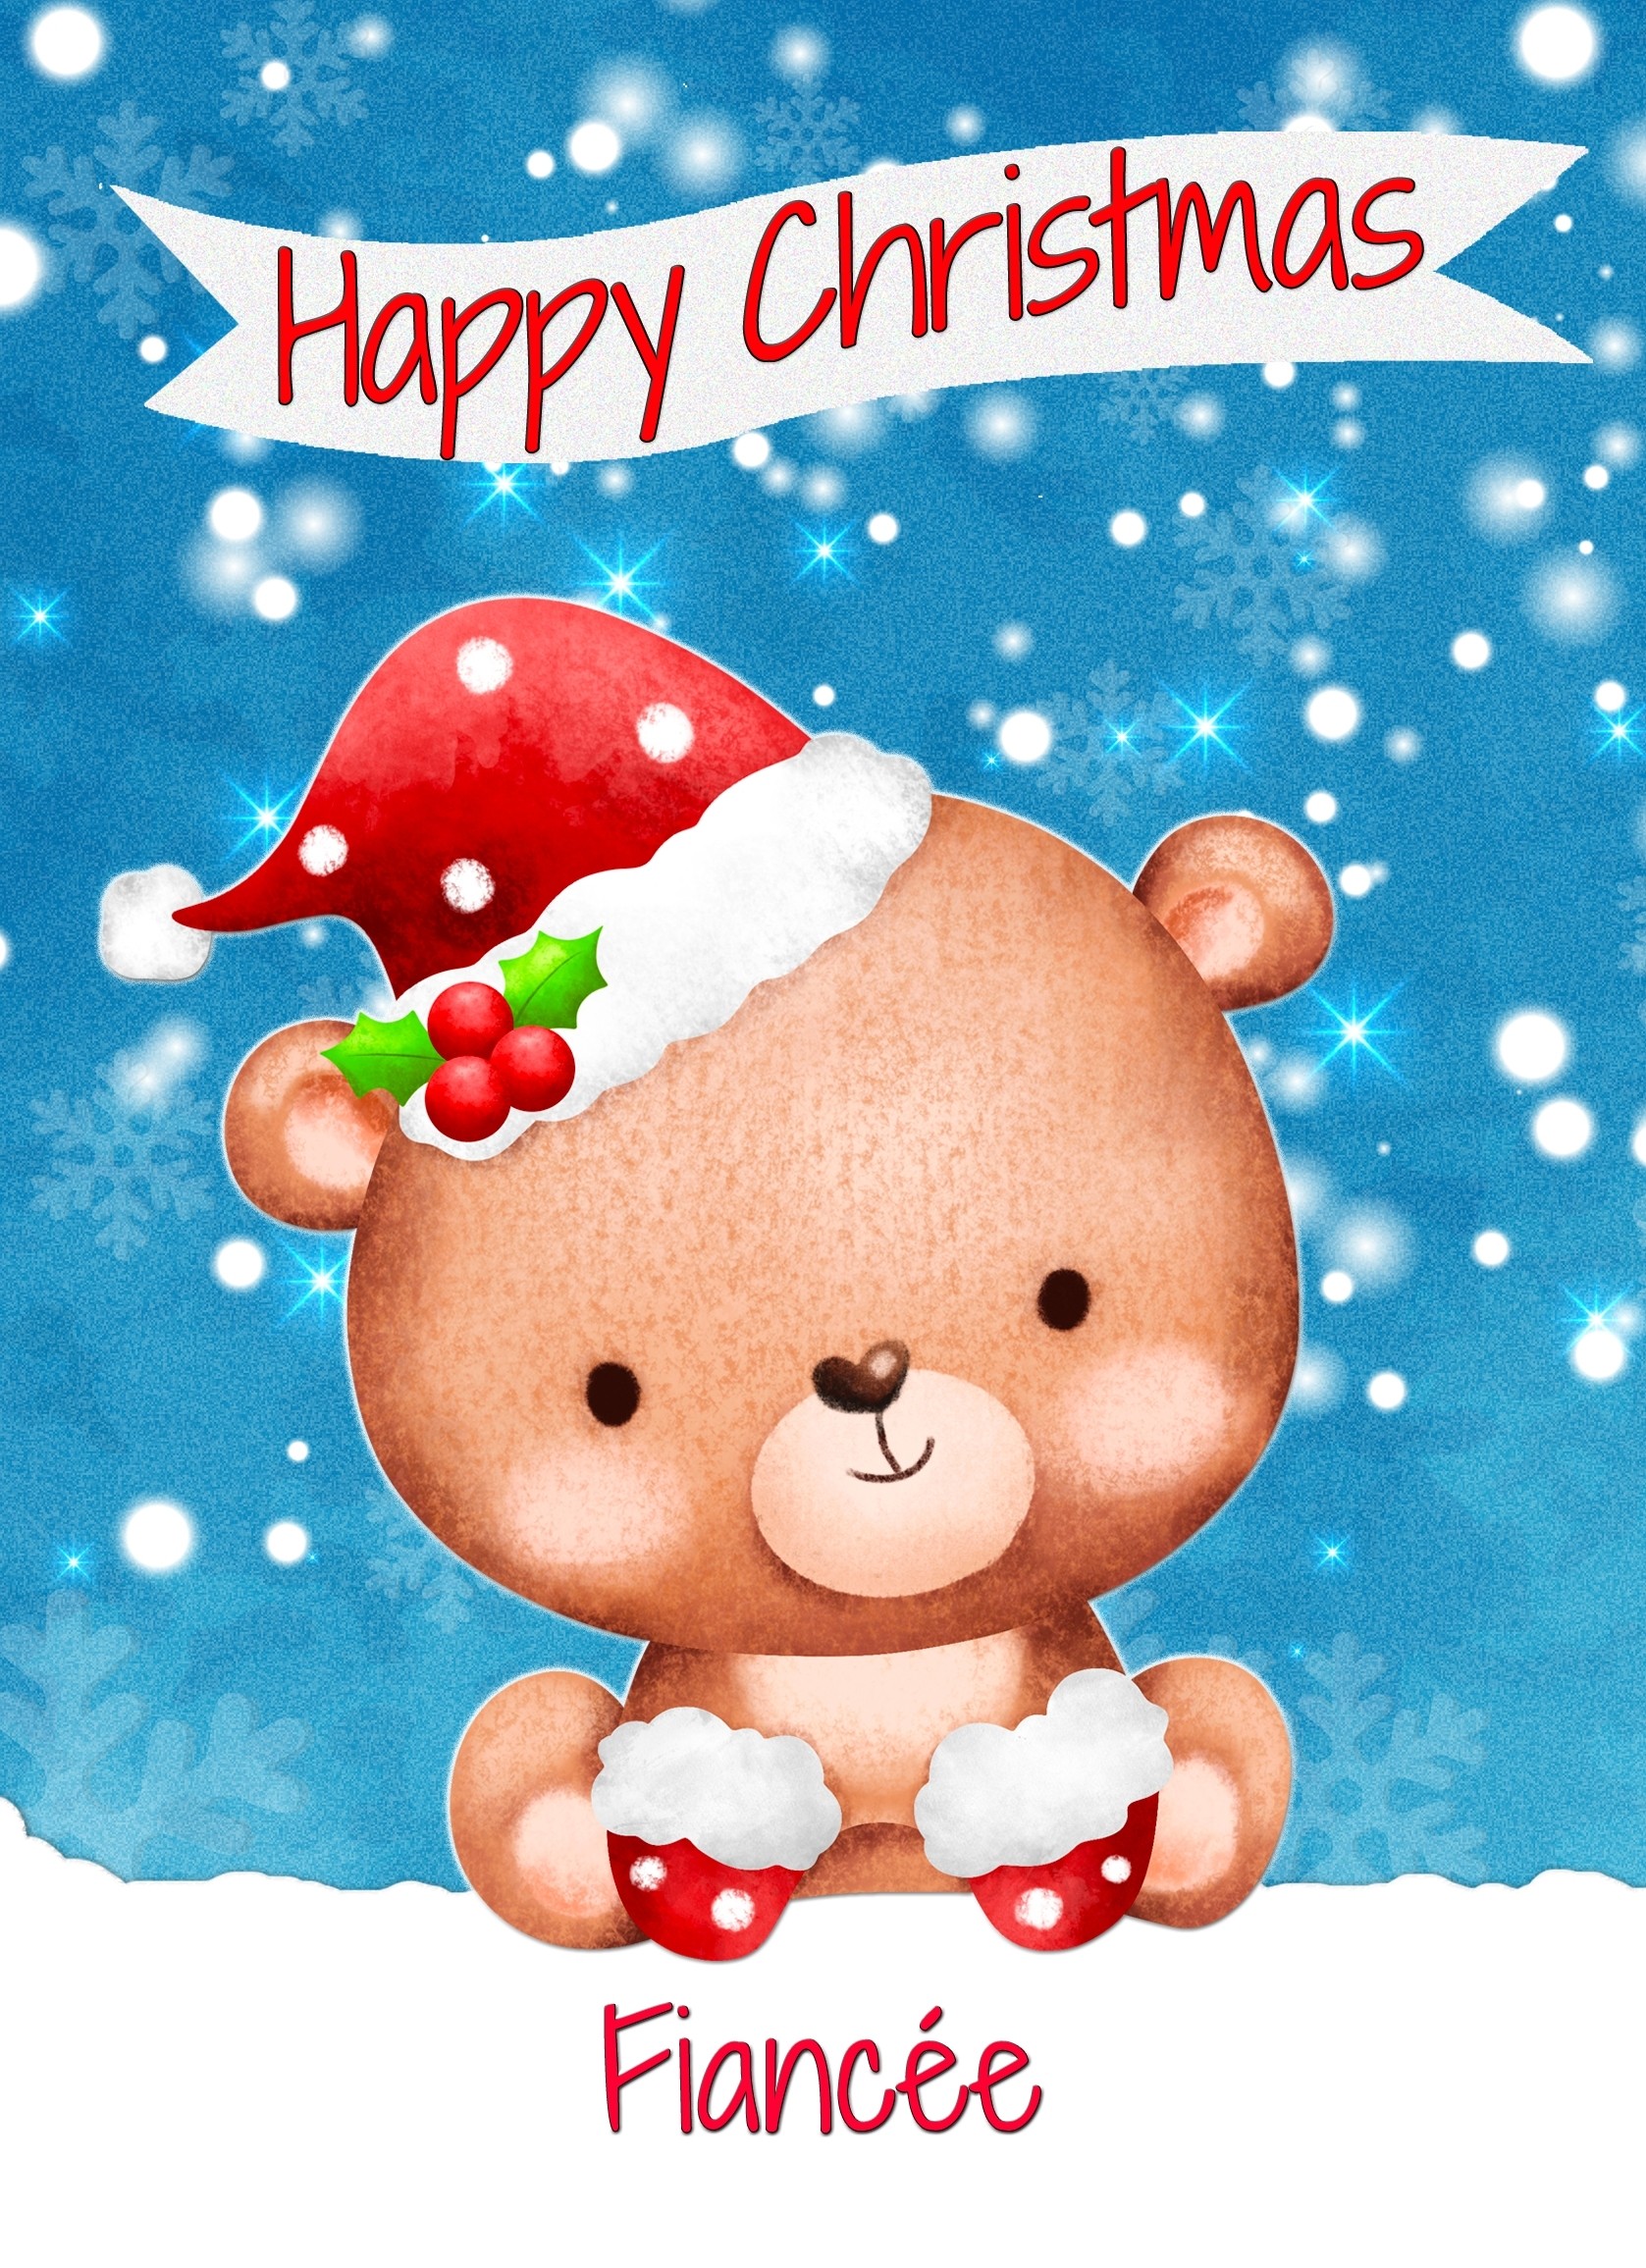 Christmas Card For Fiancee (Happy Christmas, Bear)